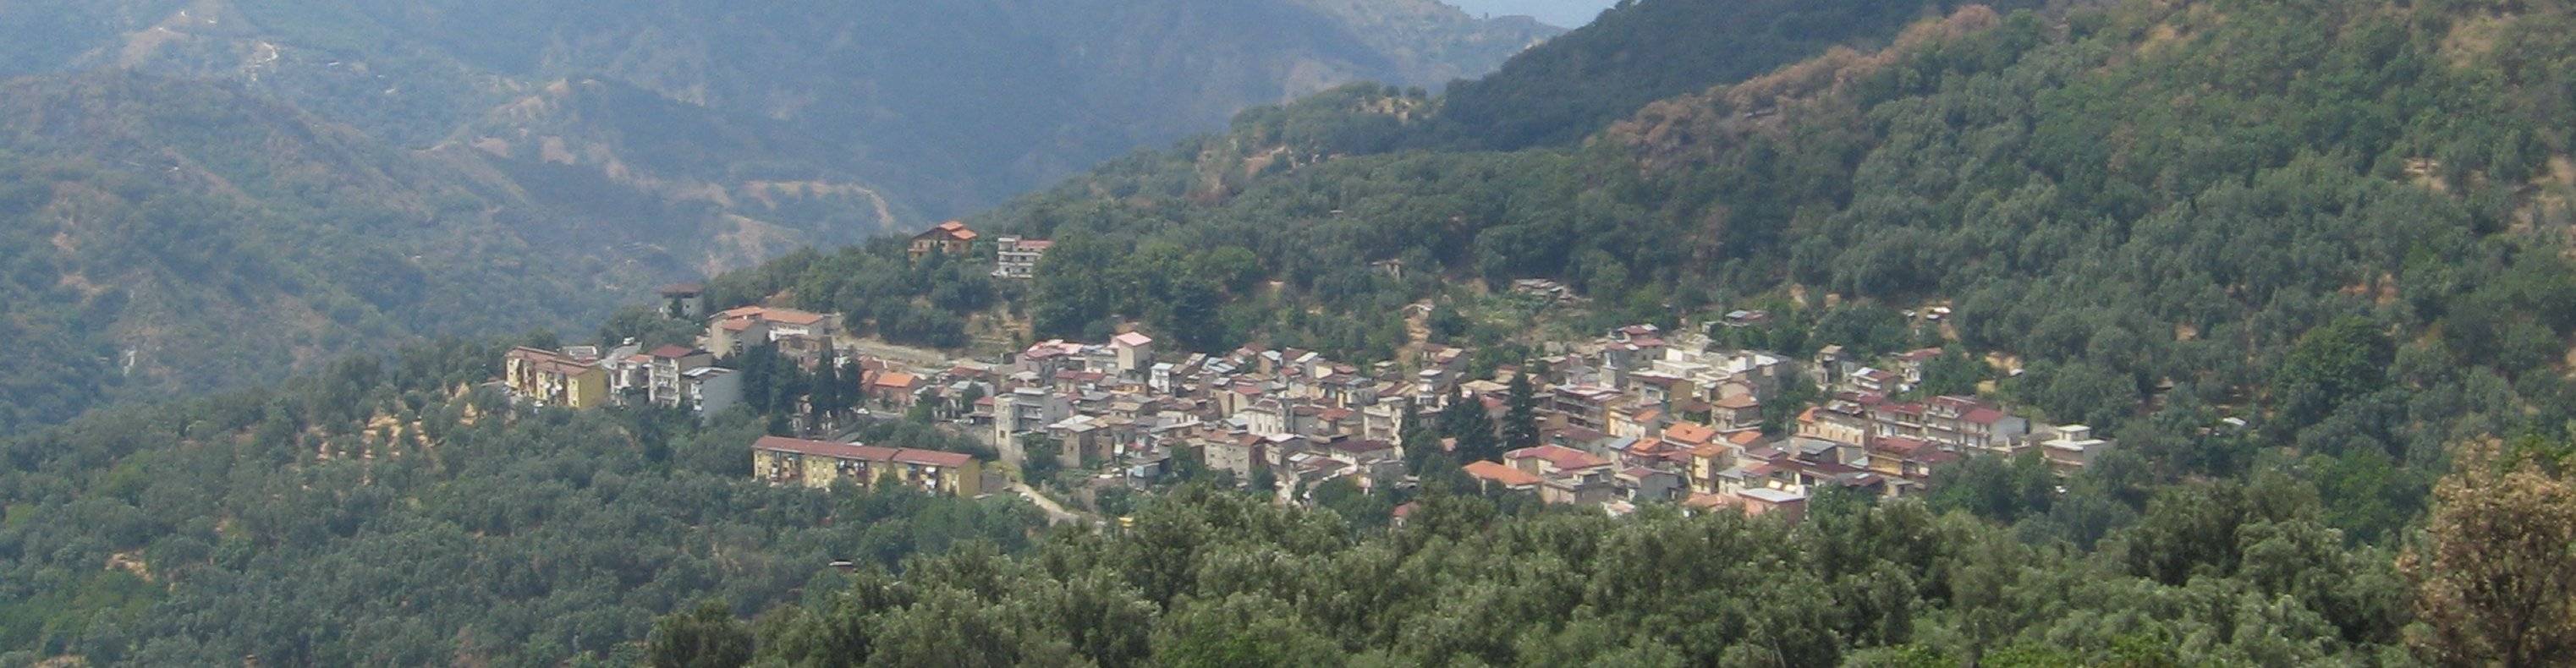 Veduta panoramica di Sant'Alessio in Aspromonte